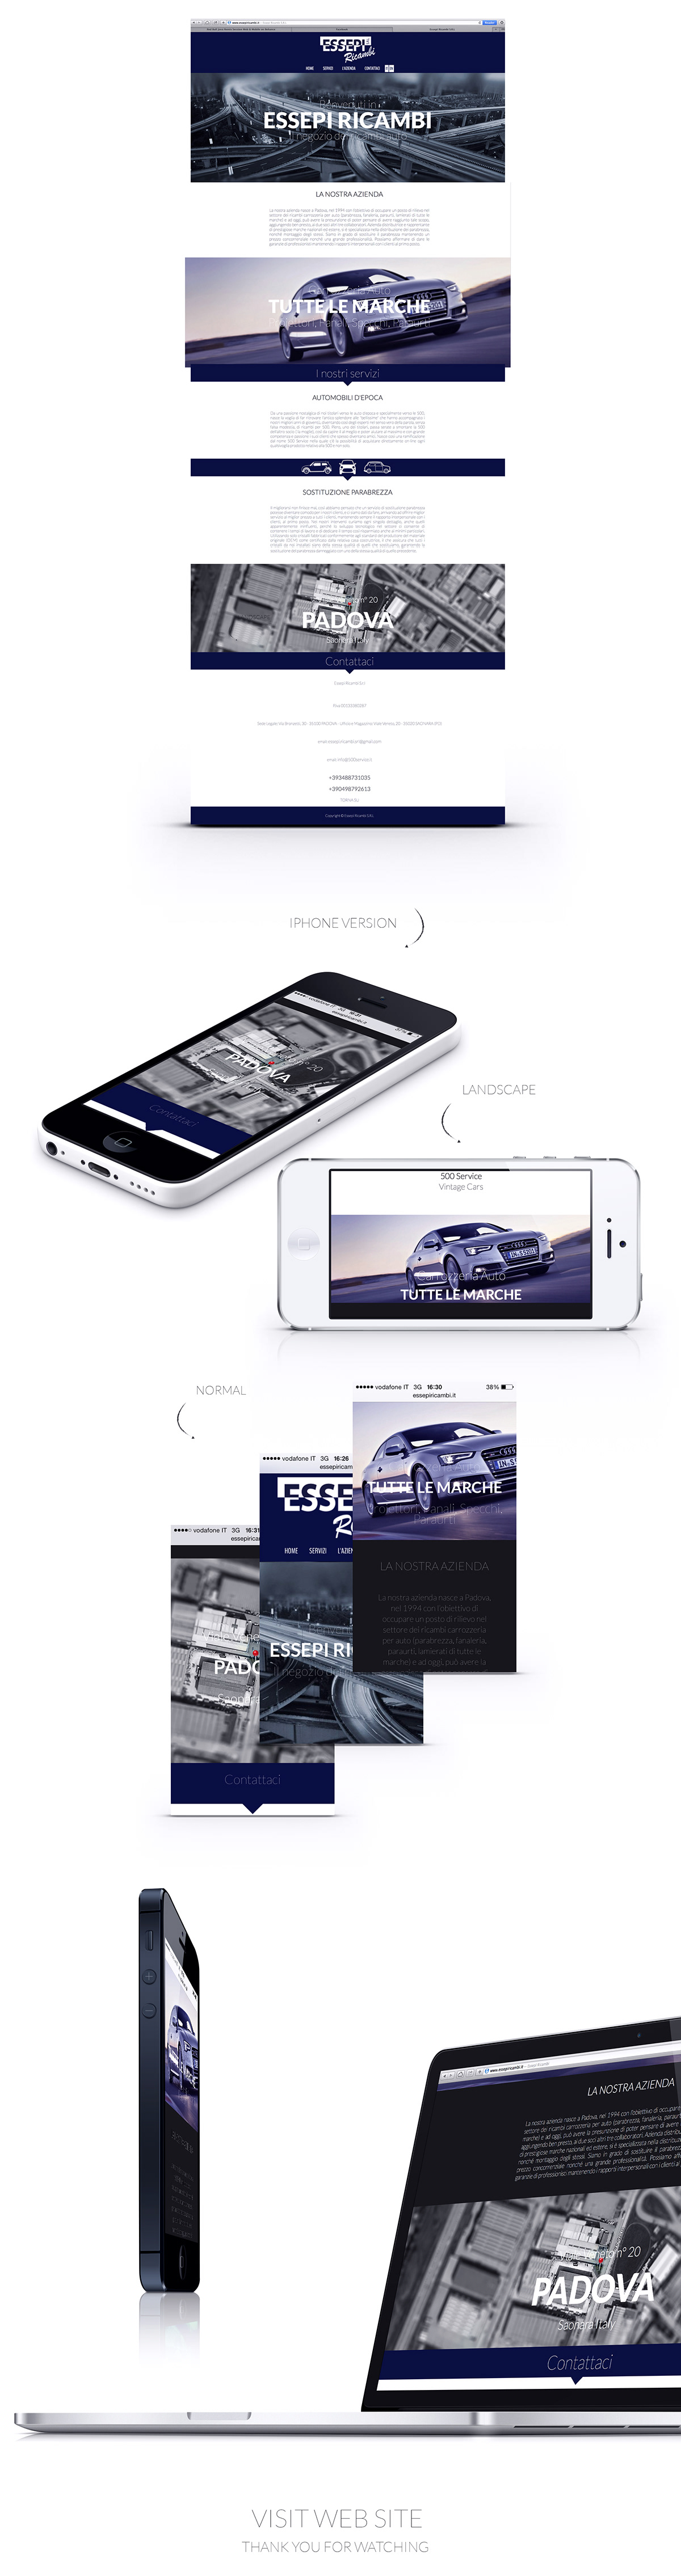 Web graphics Responsive responsive layout mobile web site graphics design